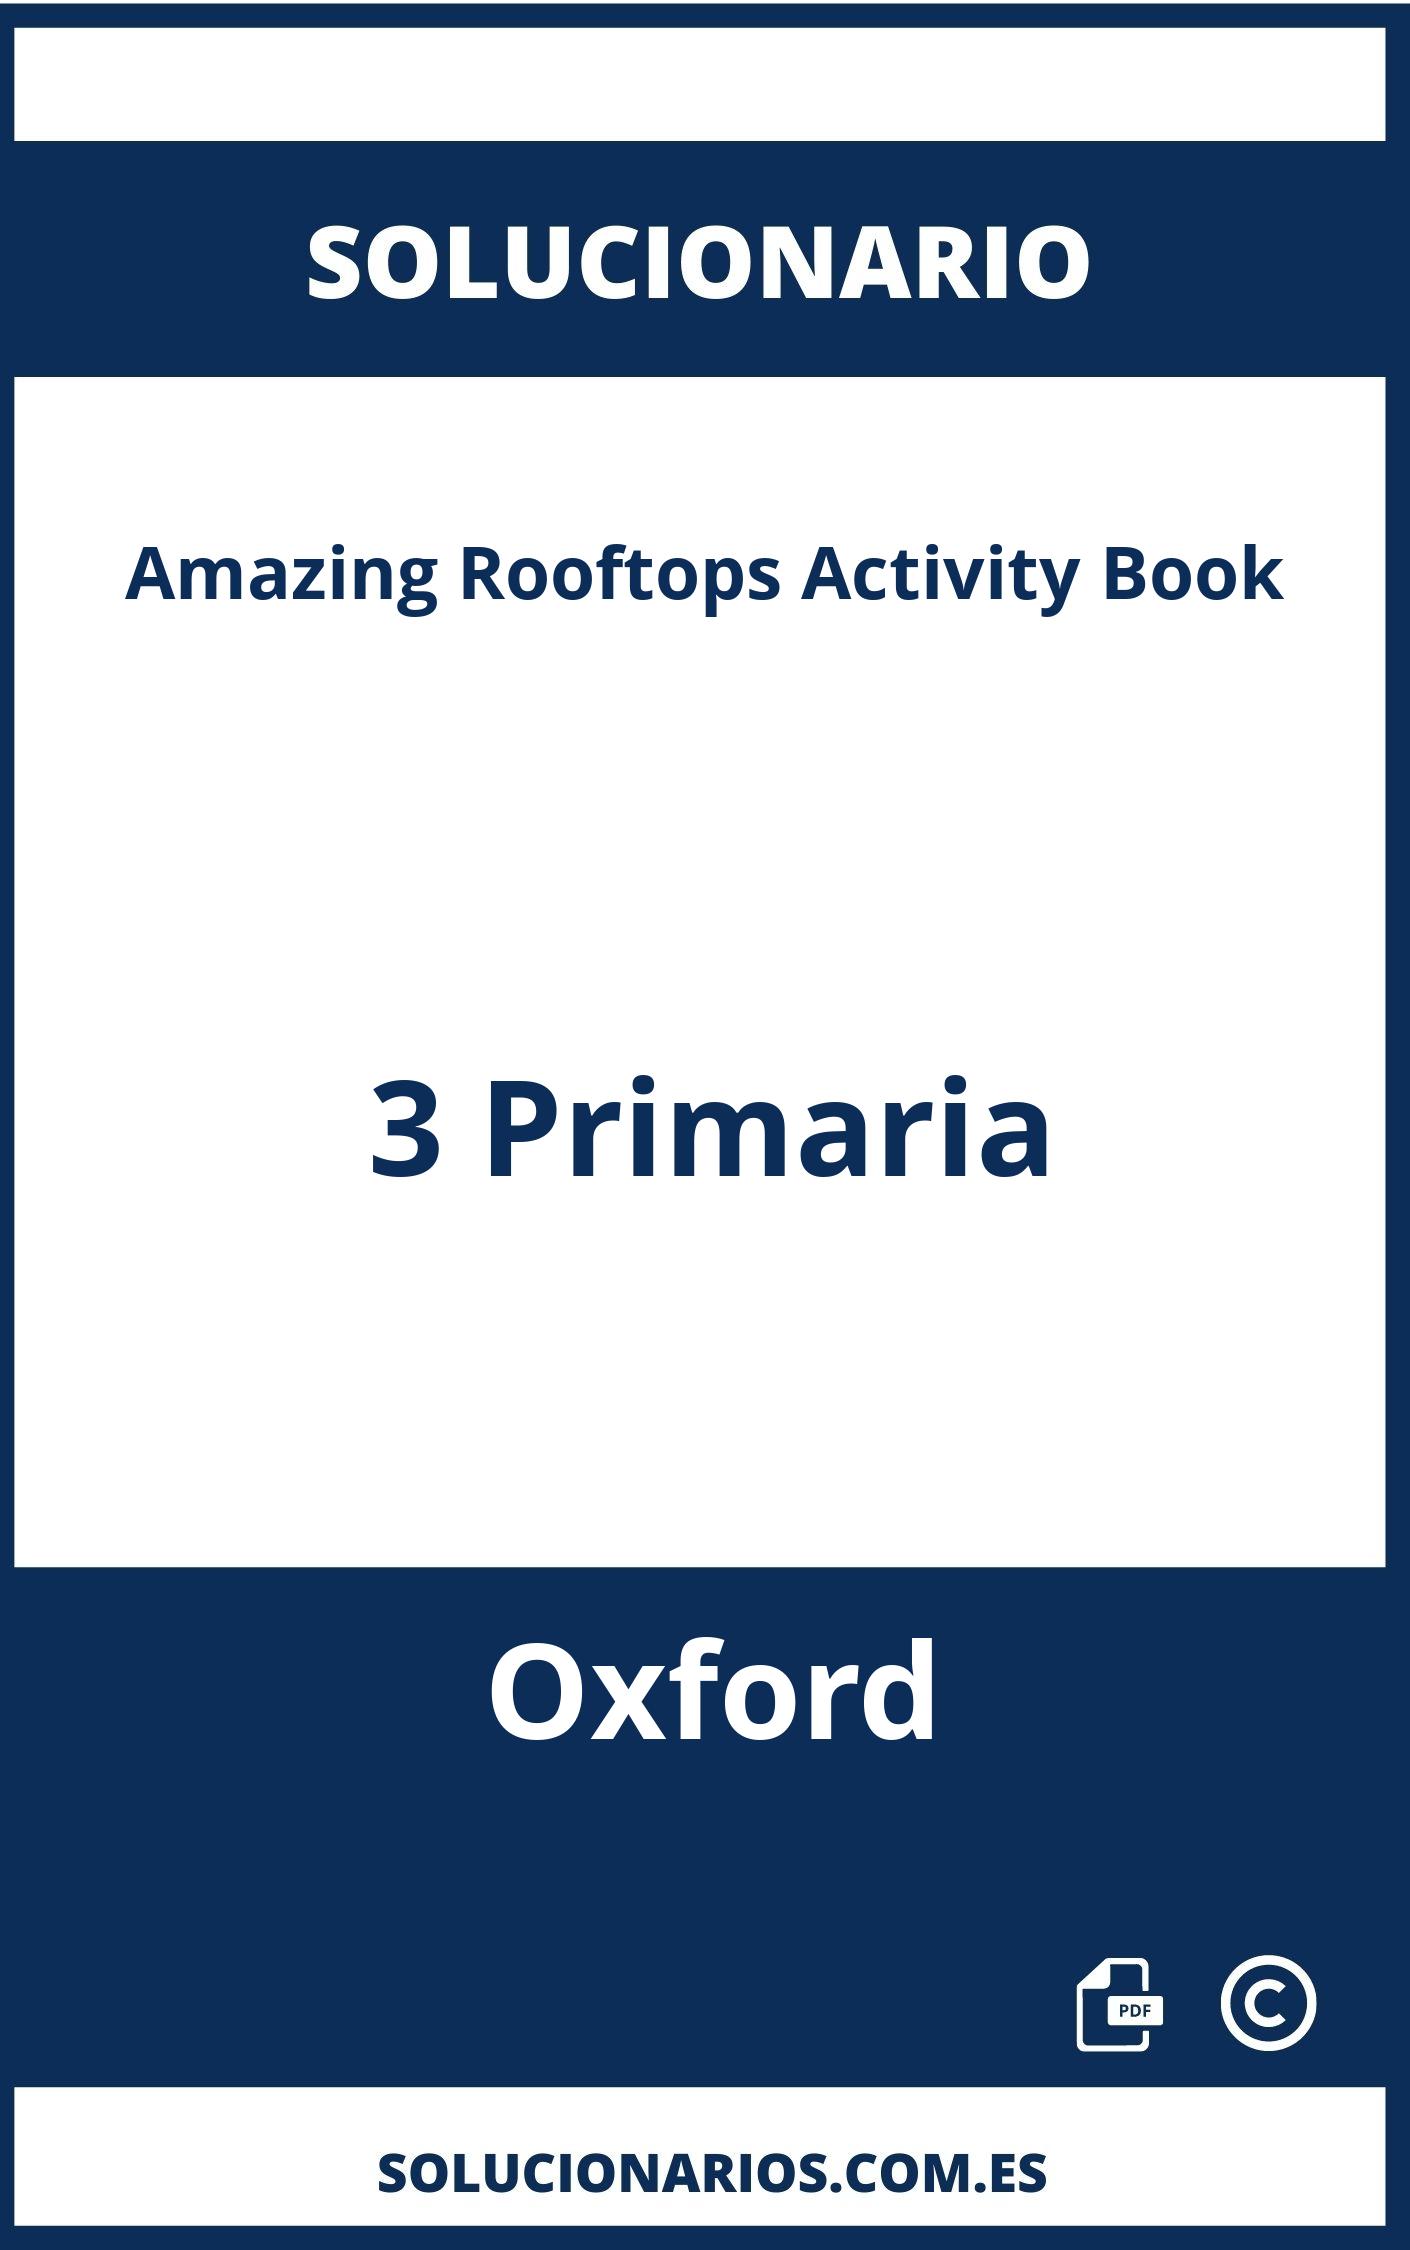 Solucionario Amazing Rooftops Activity Book 3 Primaria Oxford